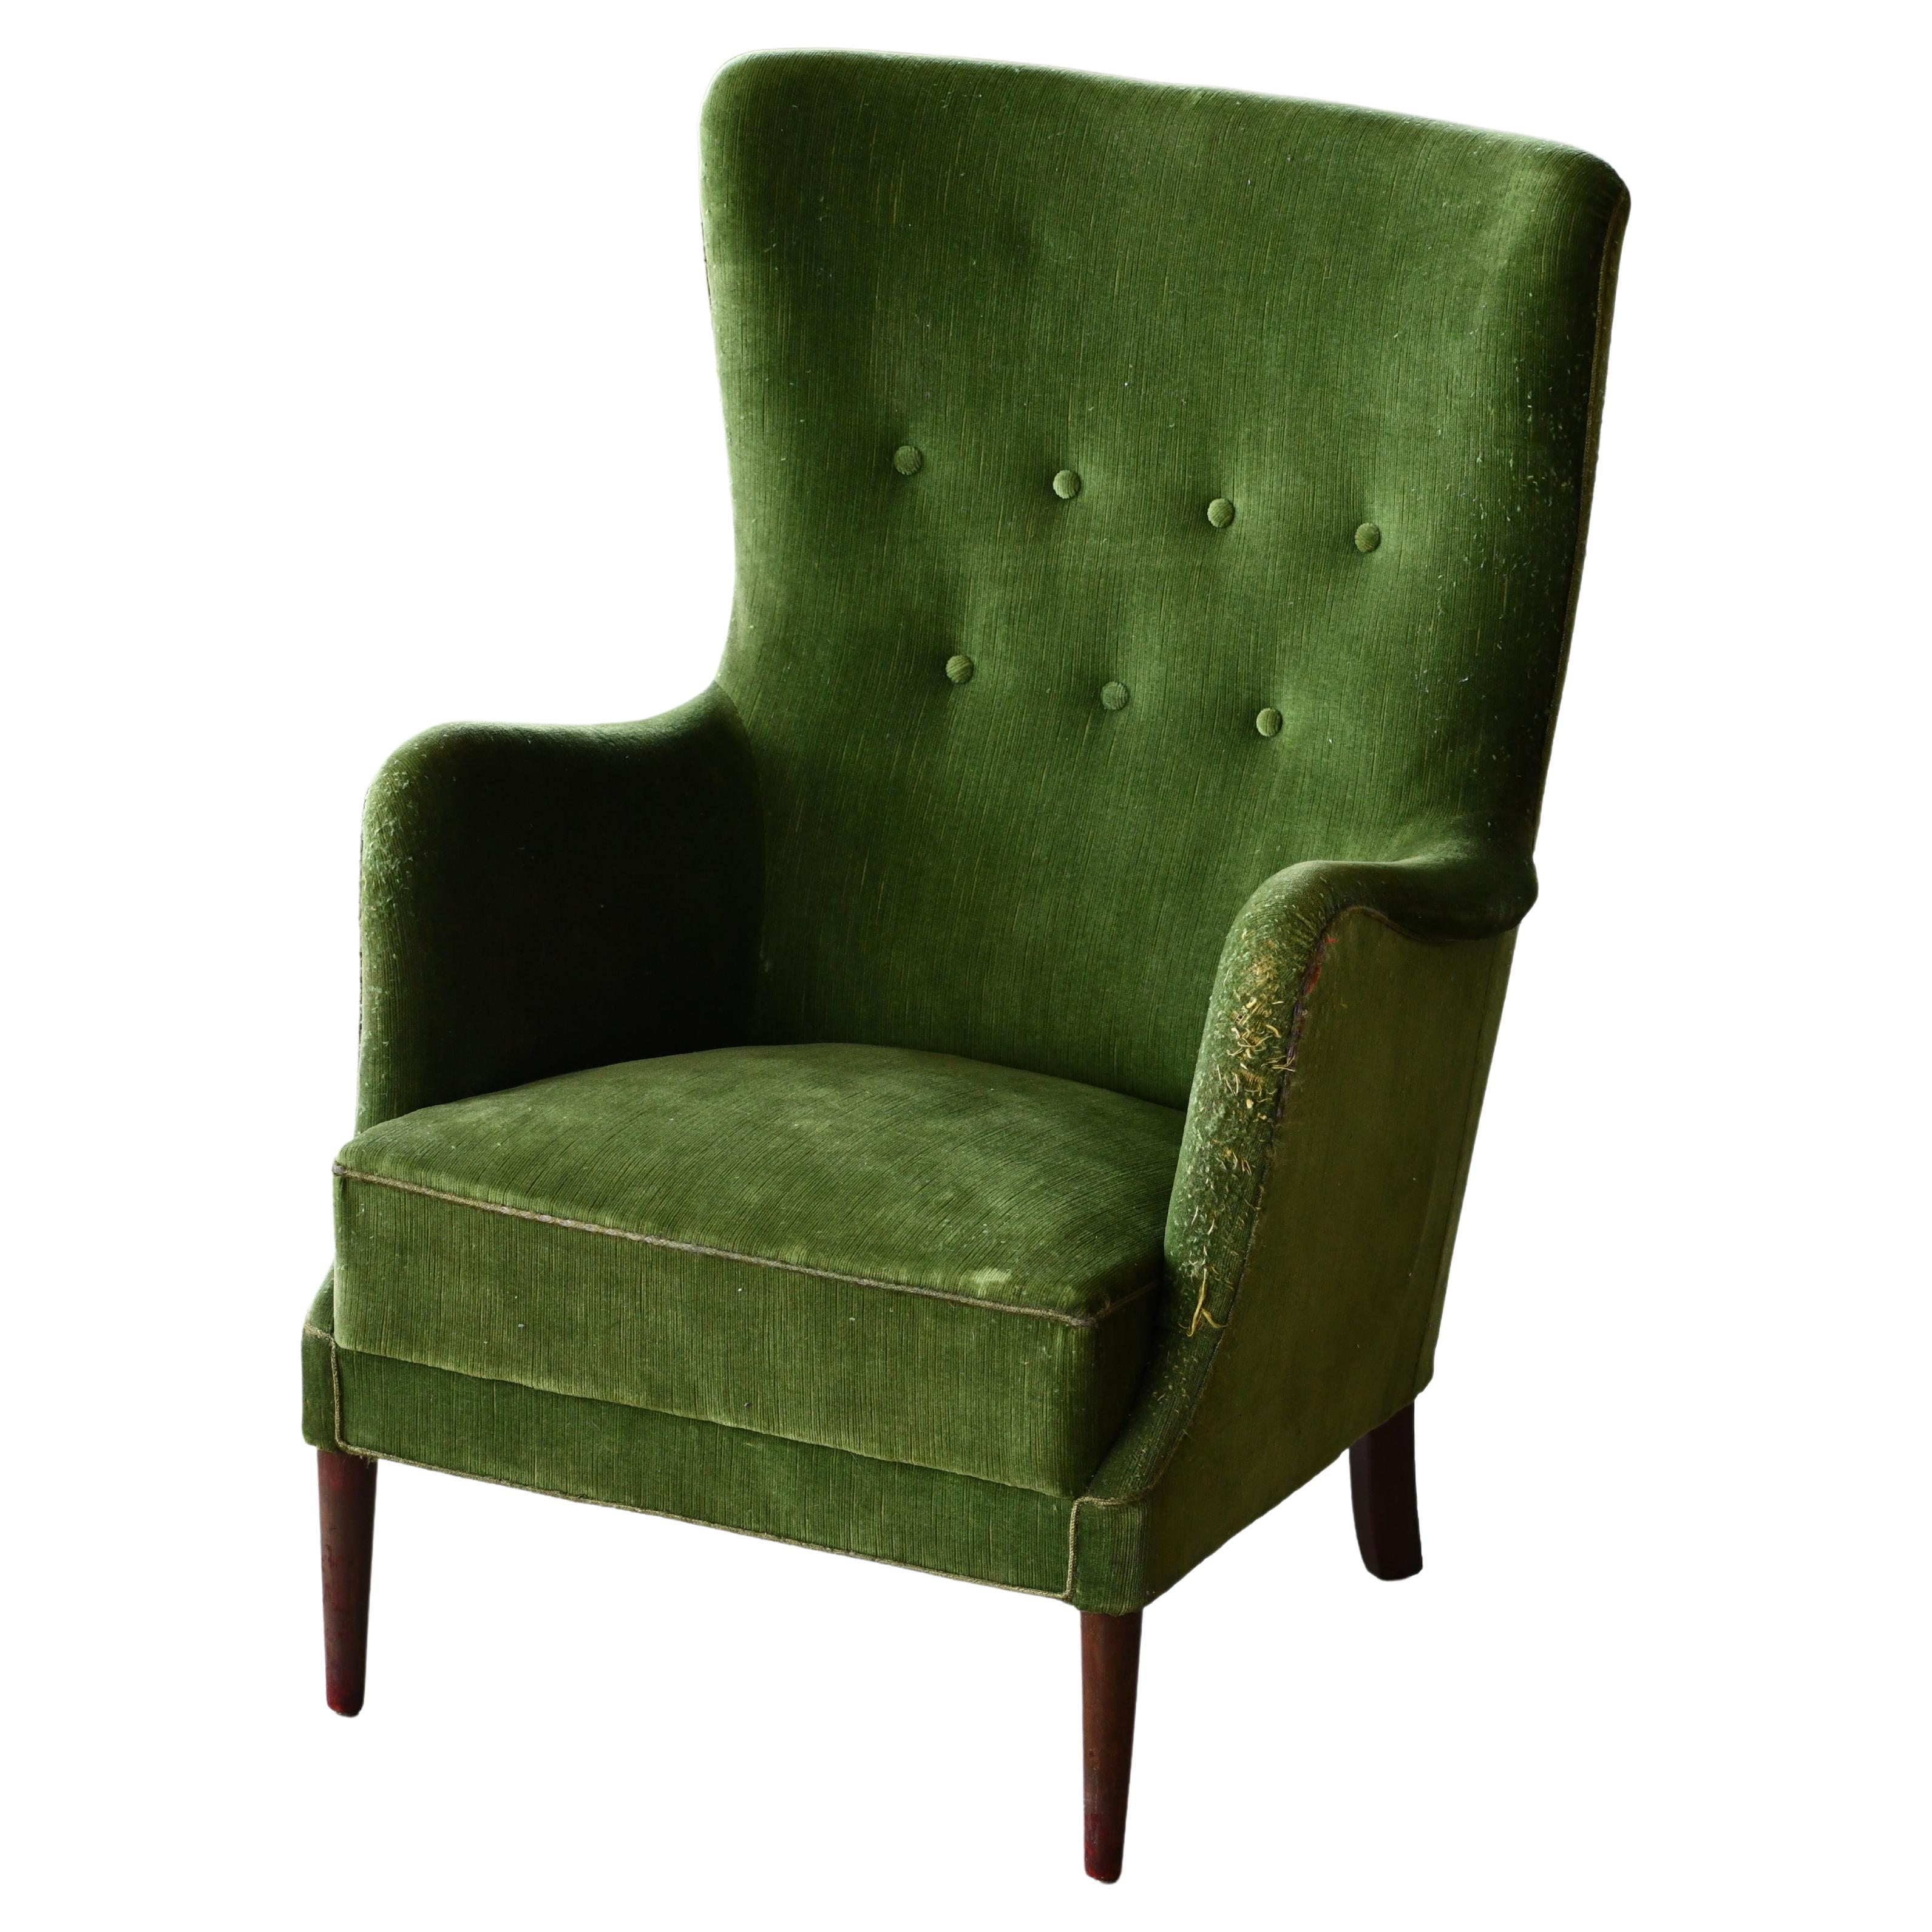 Peter Hvidt Orla Molgaard Classic Danish 1950s Lounge Chair For Sale